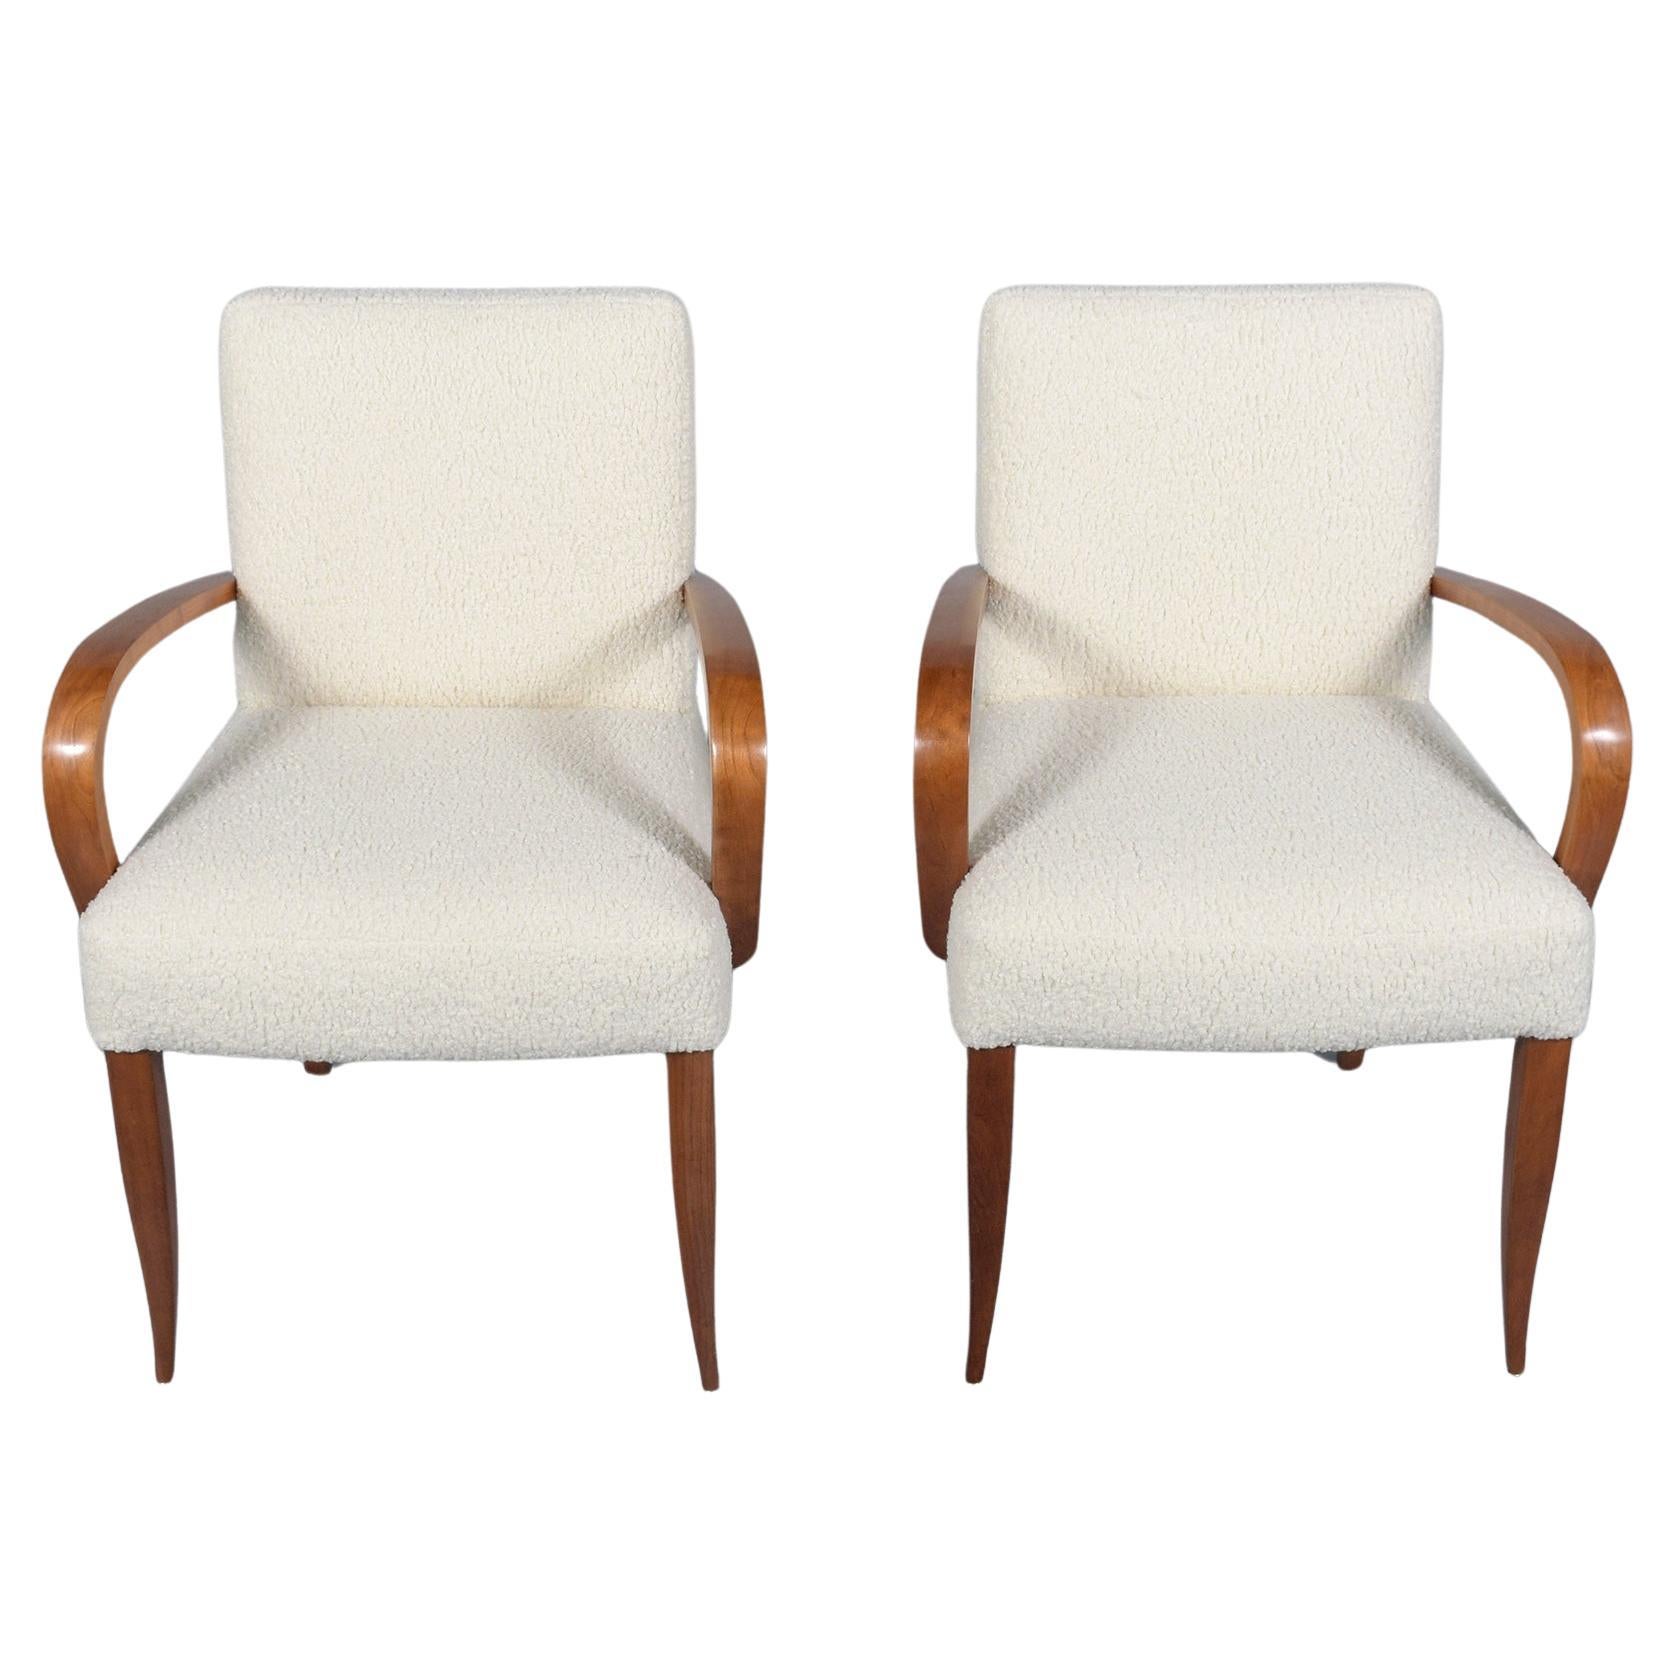 Pair of Mid-Century Modern Walnut Armchairs: Refined Elegance & Comfort